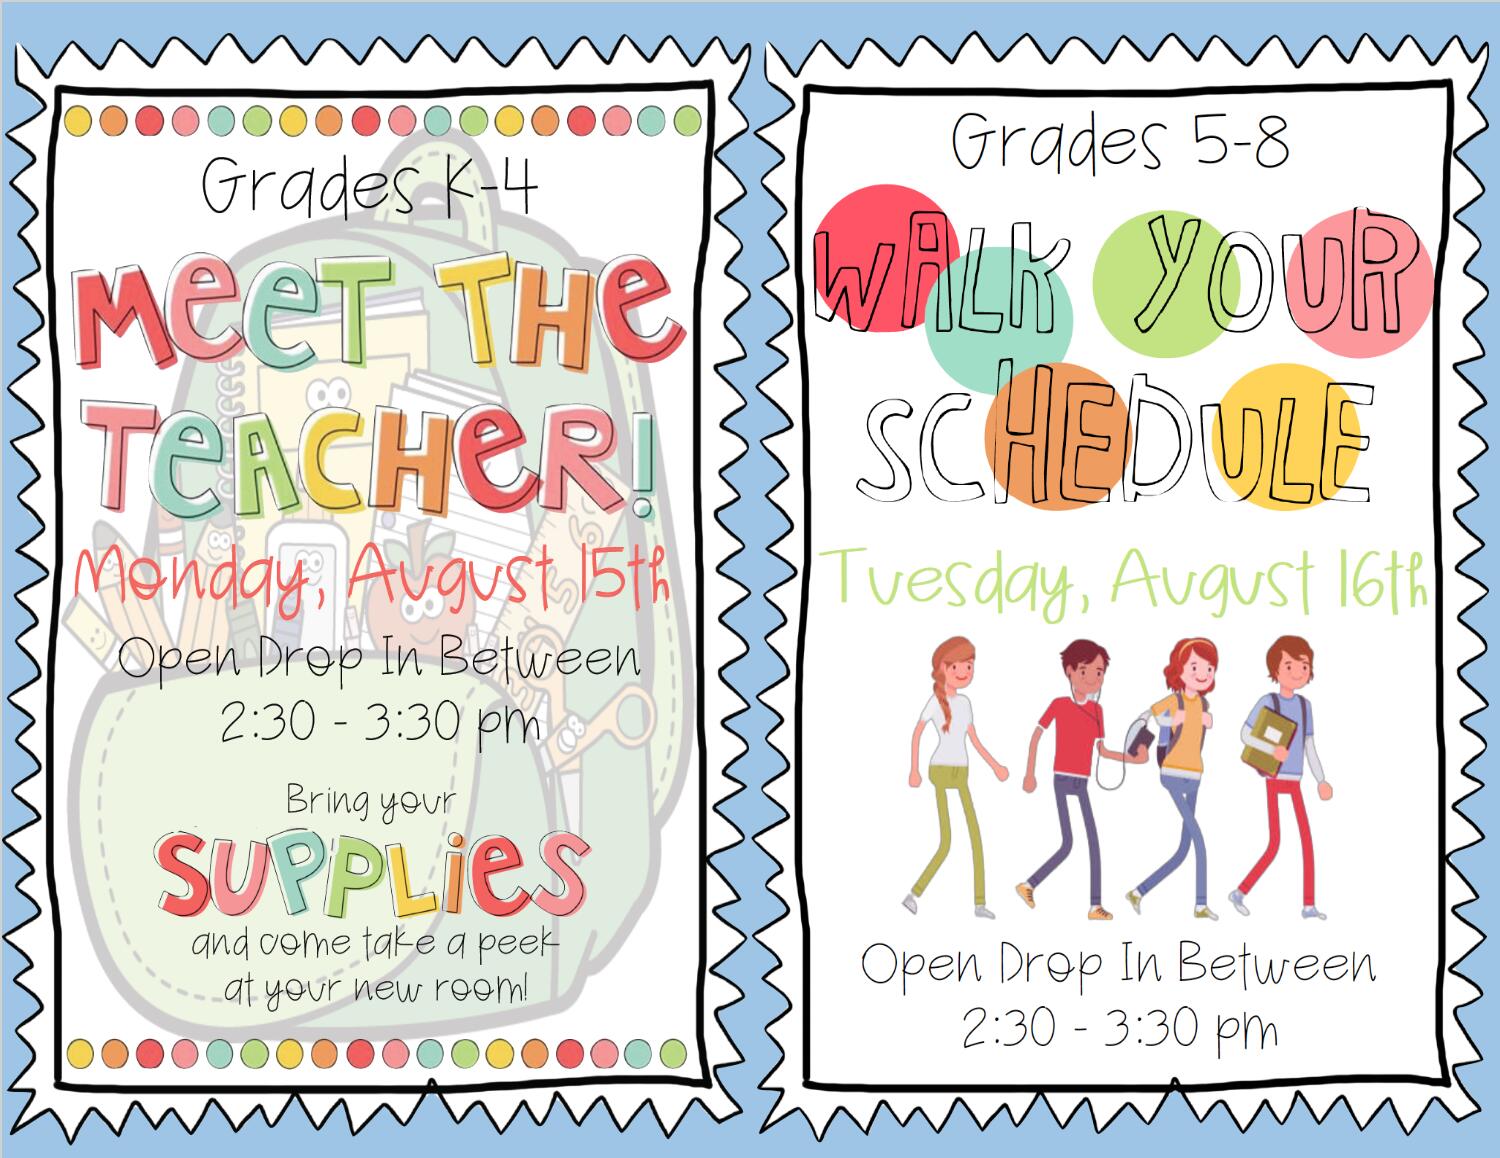 K-4 "Meet the Teacher" 8/15 and 5-8 "Walk Your Schedule" 8/16